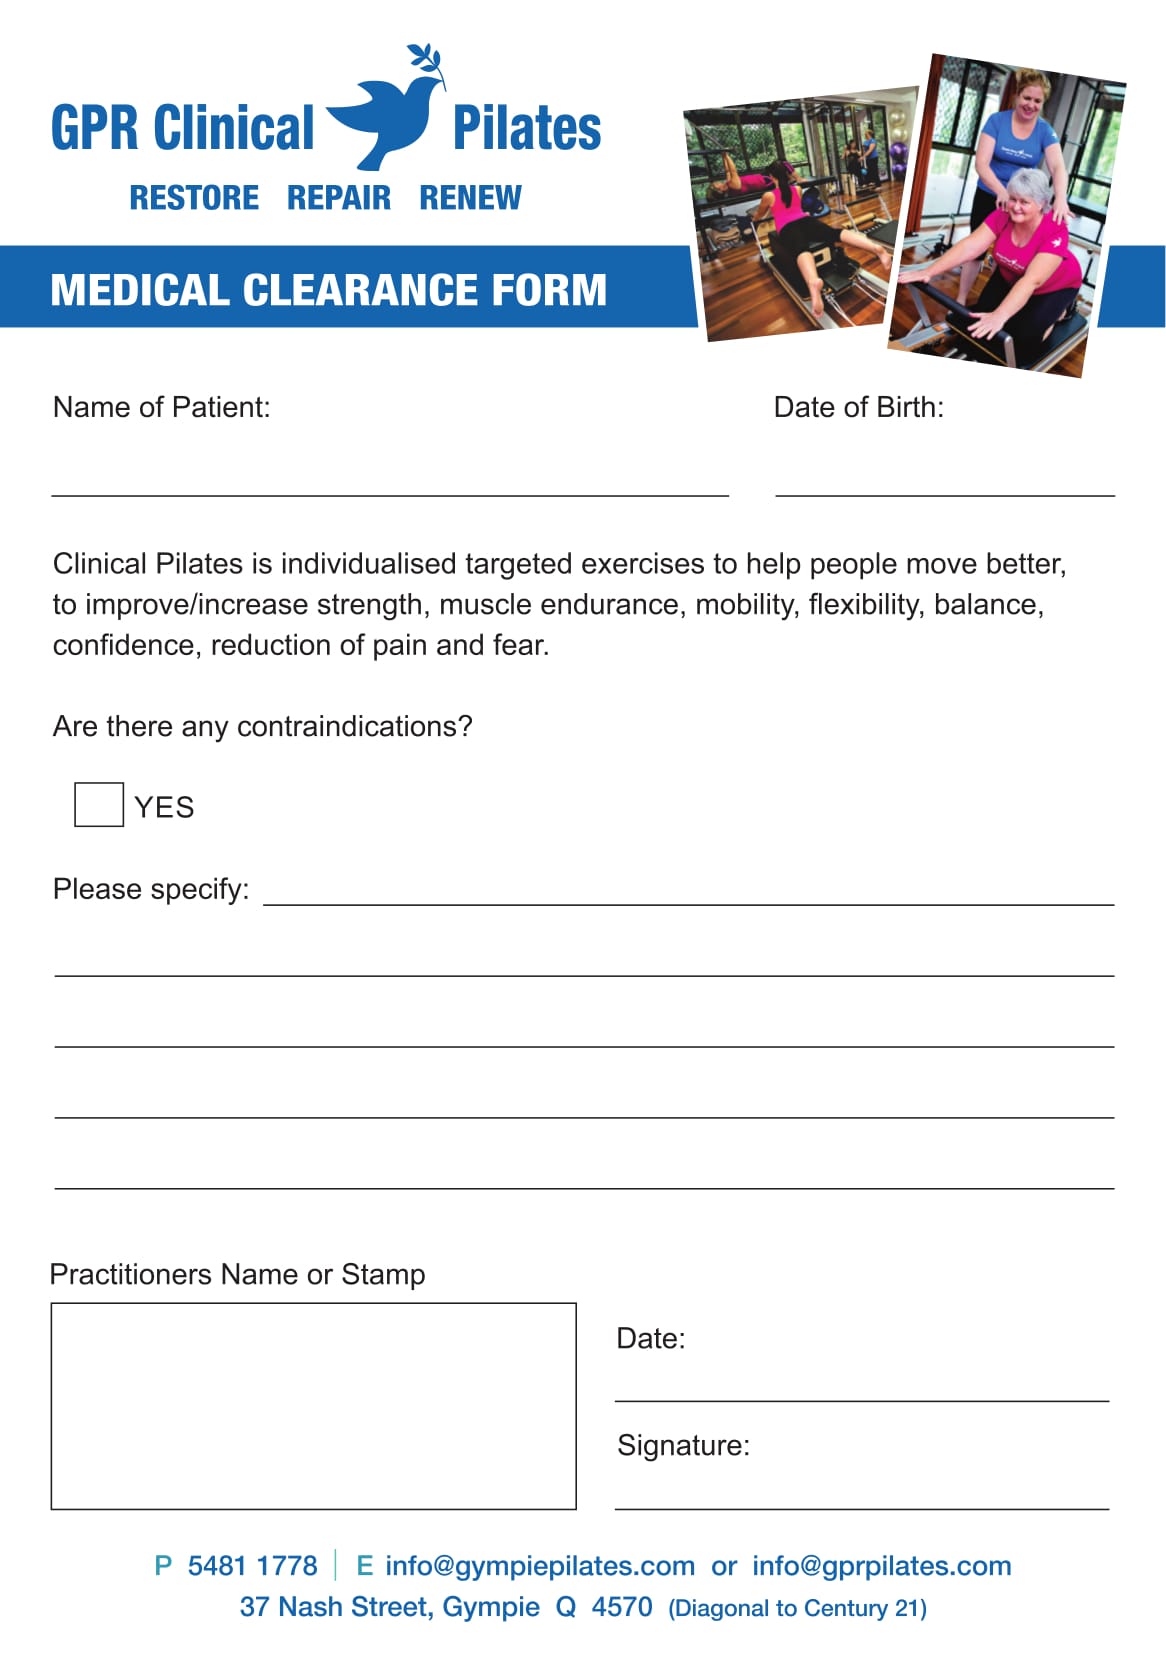 clinical pilates medical clearance form 1